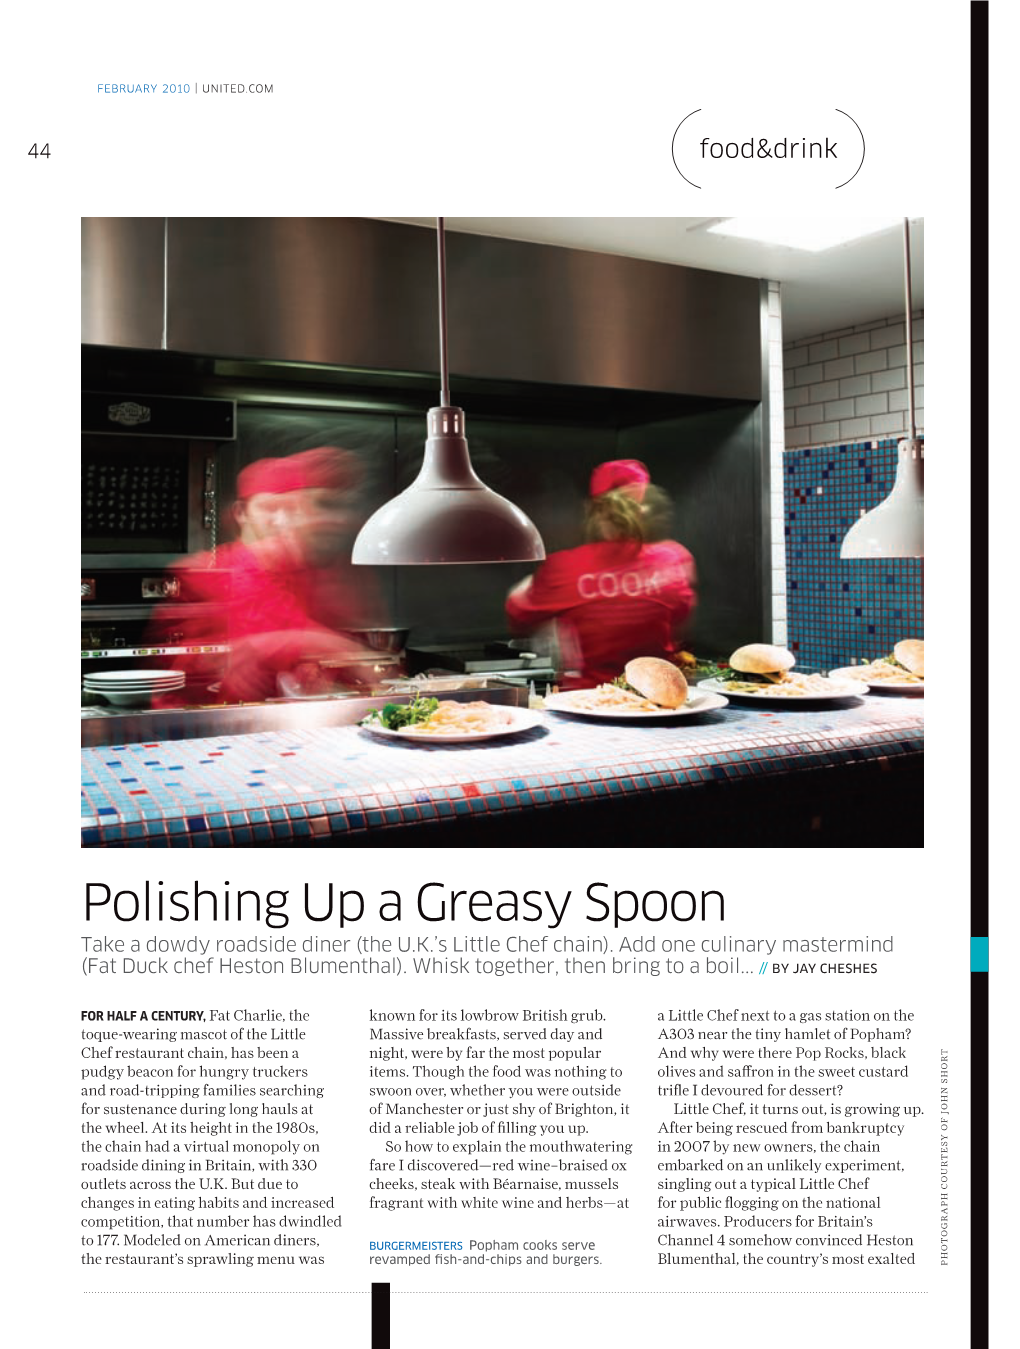 Polishing up a Greasy Spoon Take a Dowdy Roadside Diner (The U.K.’S Little Chef Chain)